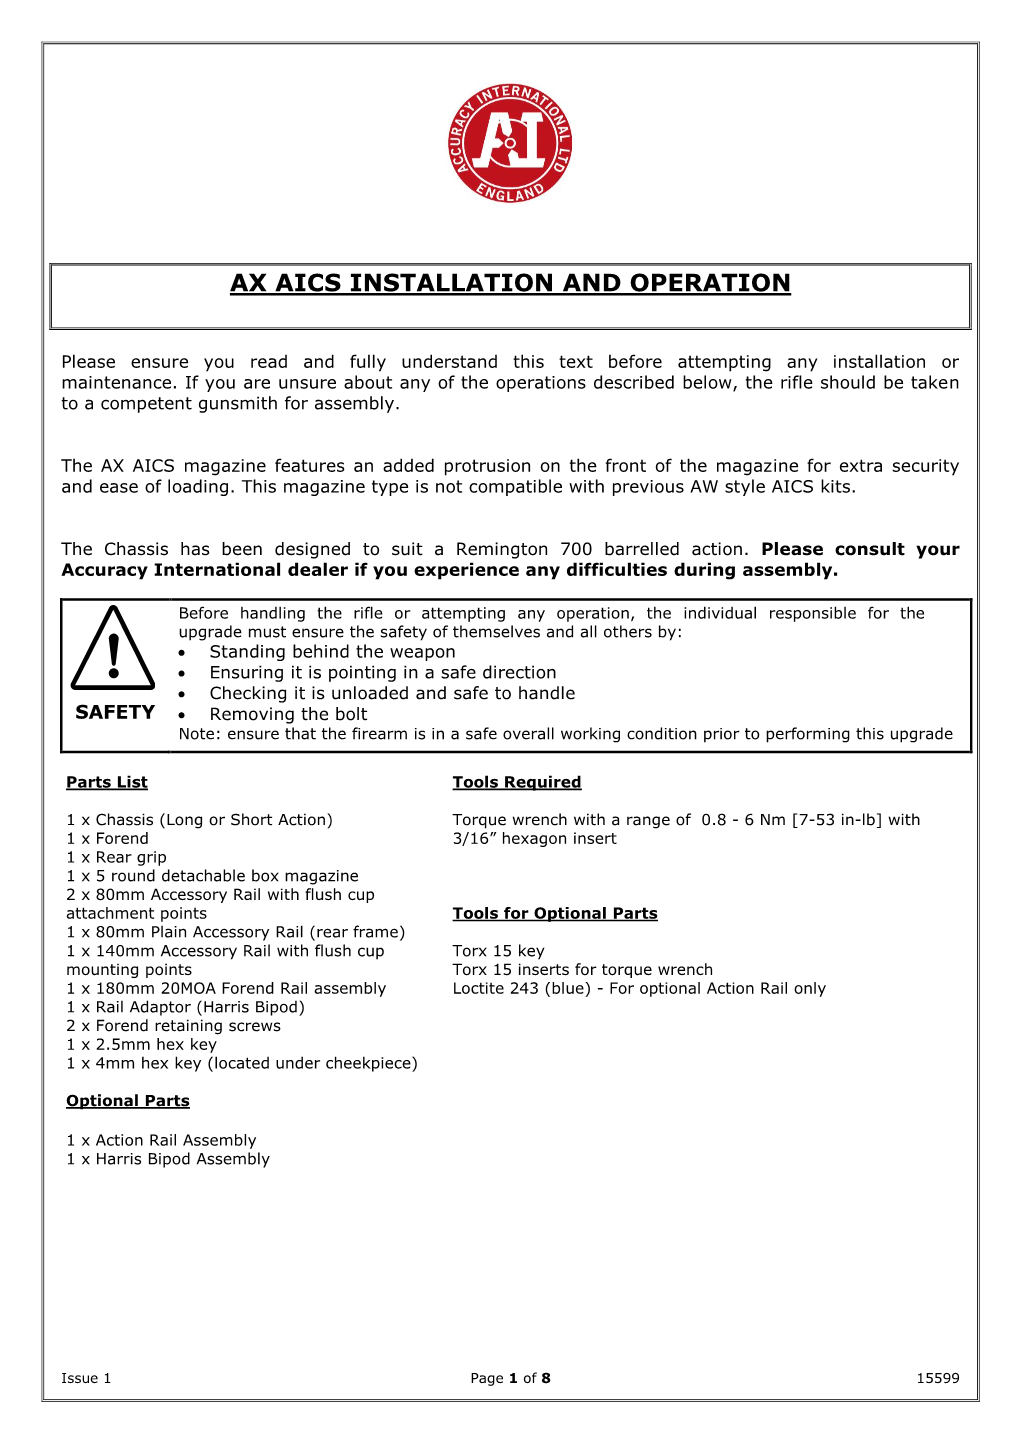 Ax Aics Installation and Operation